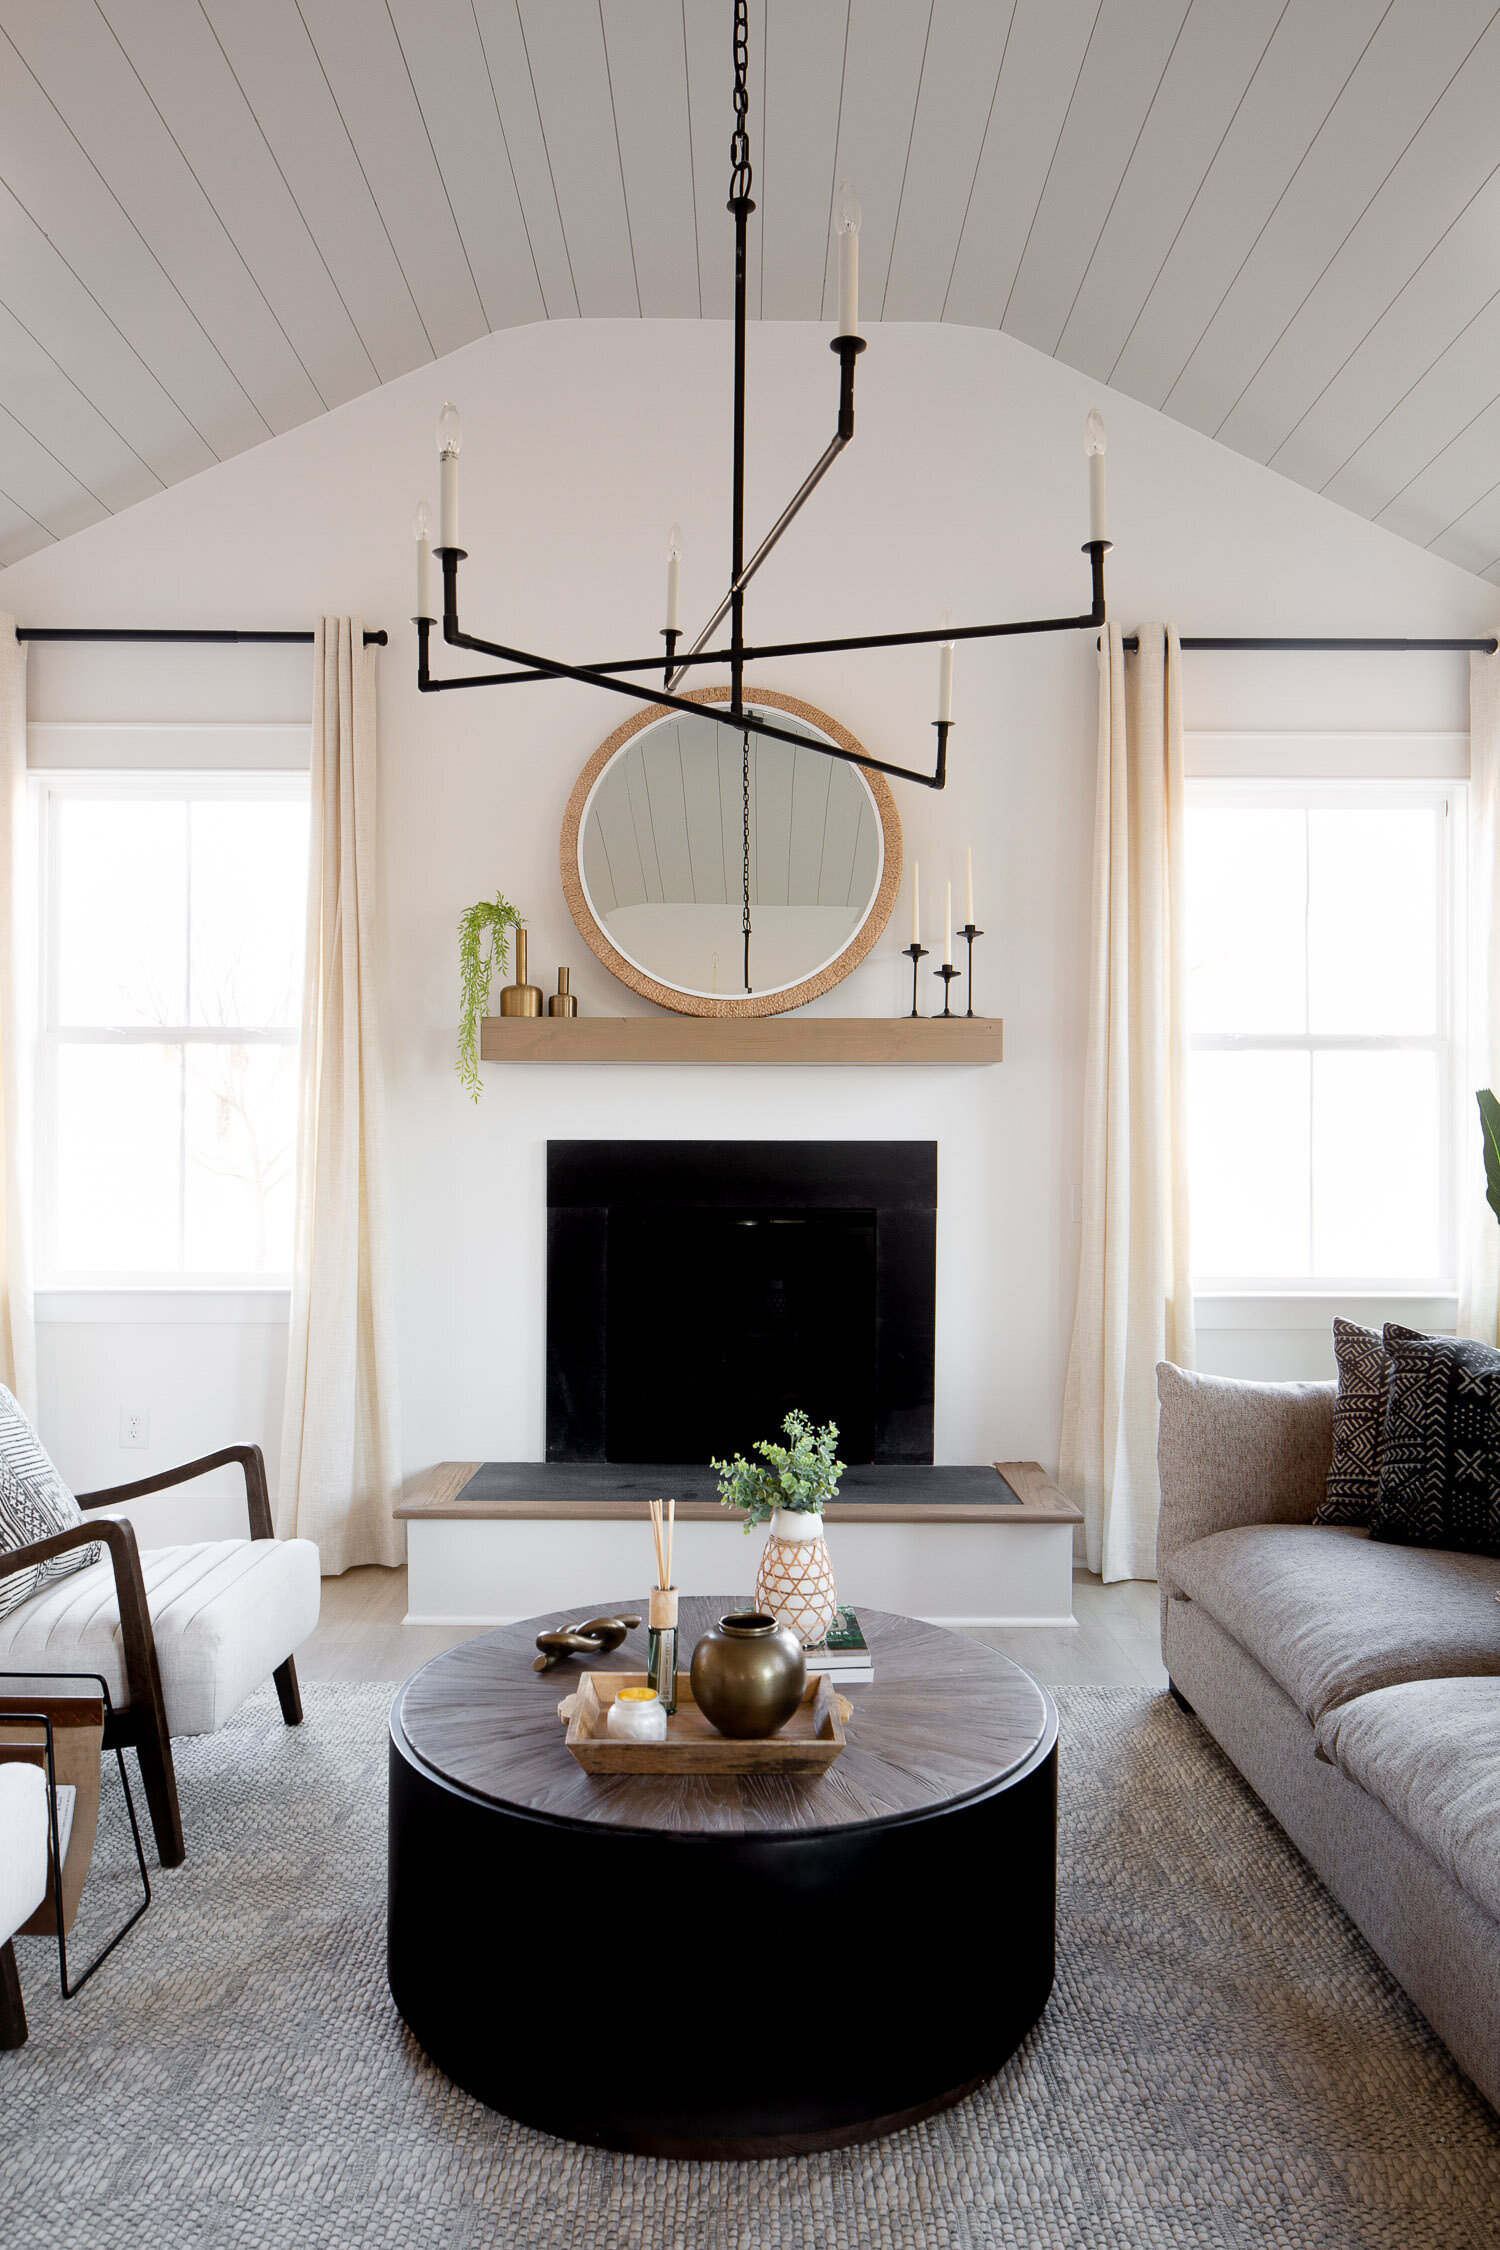 Cresent homes design of living room